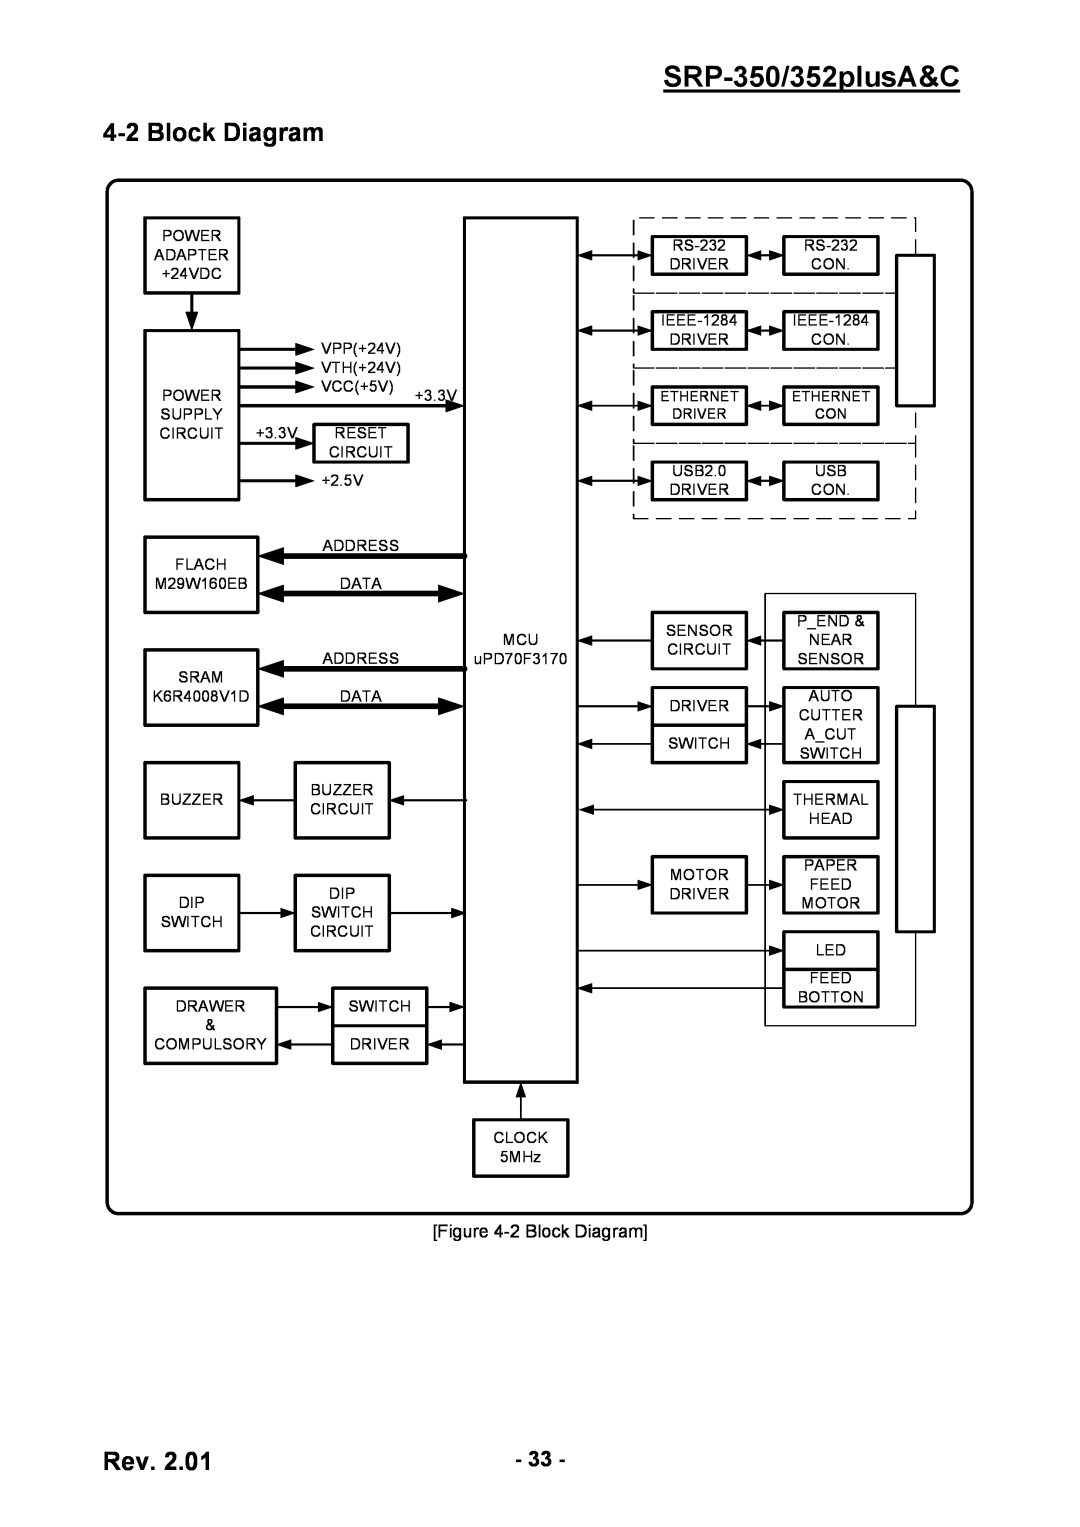 BIXOLON service manual SRP-350/352plusA&C, 2 Block Diagram 